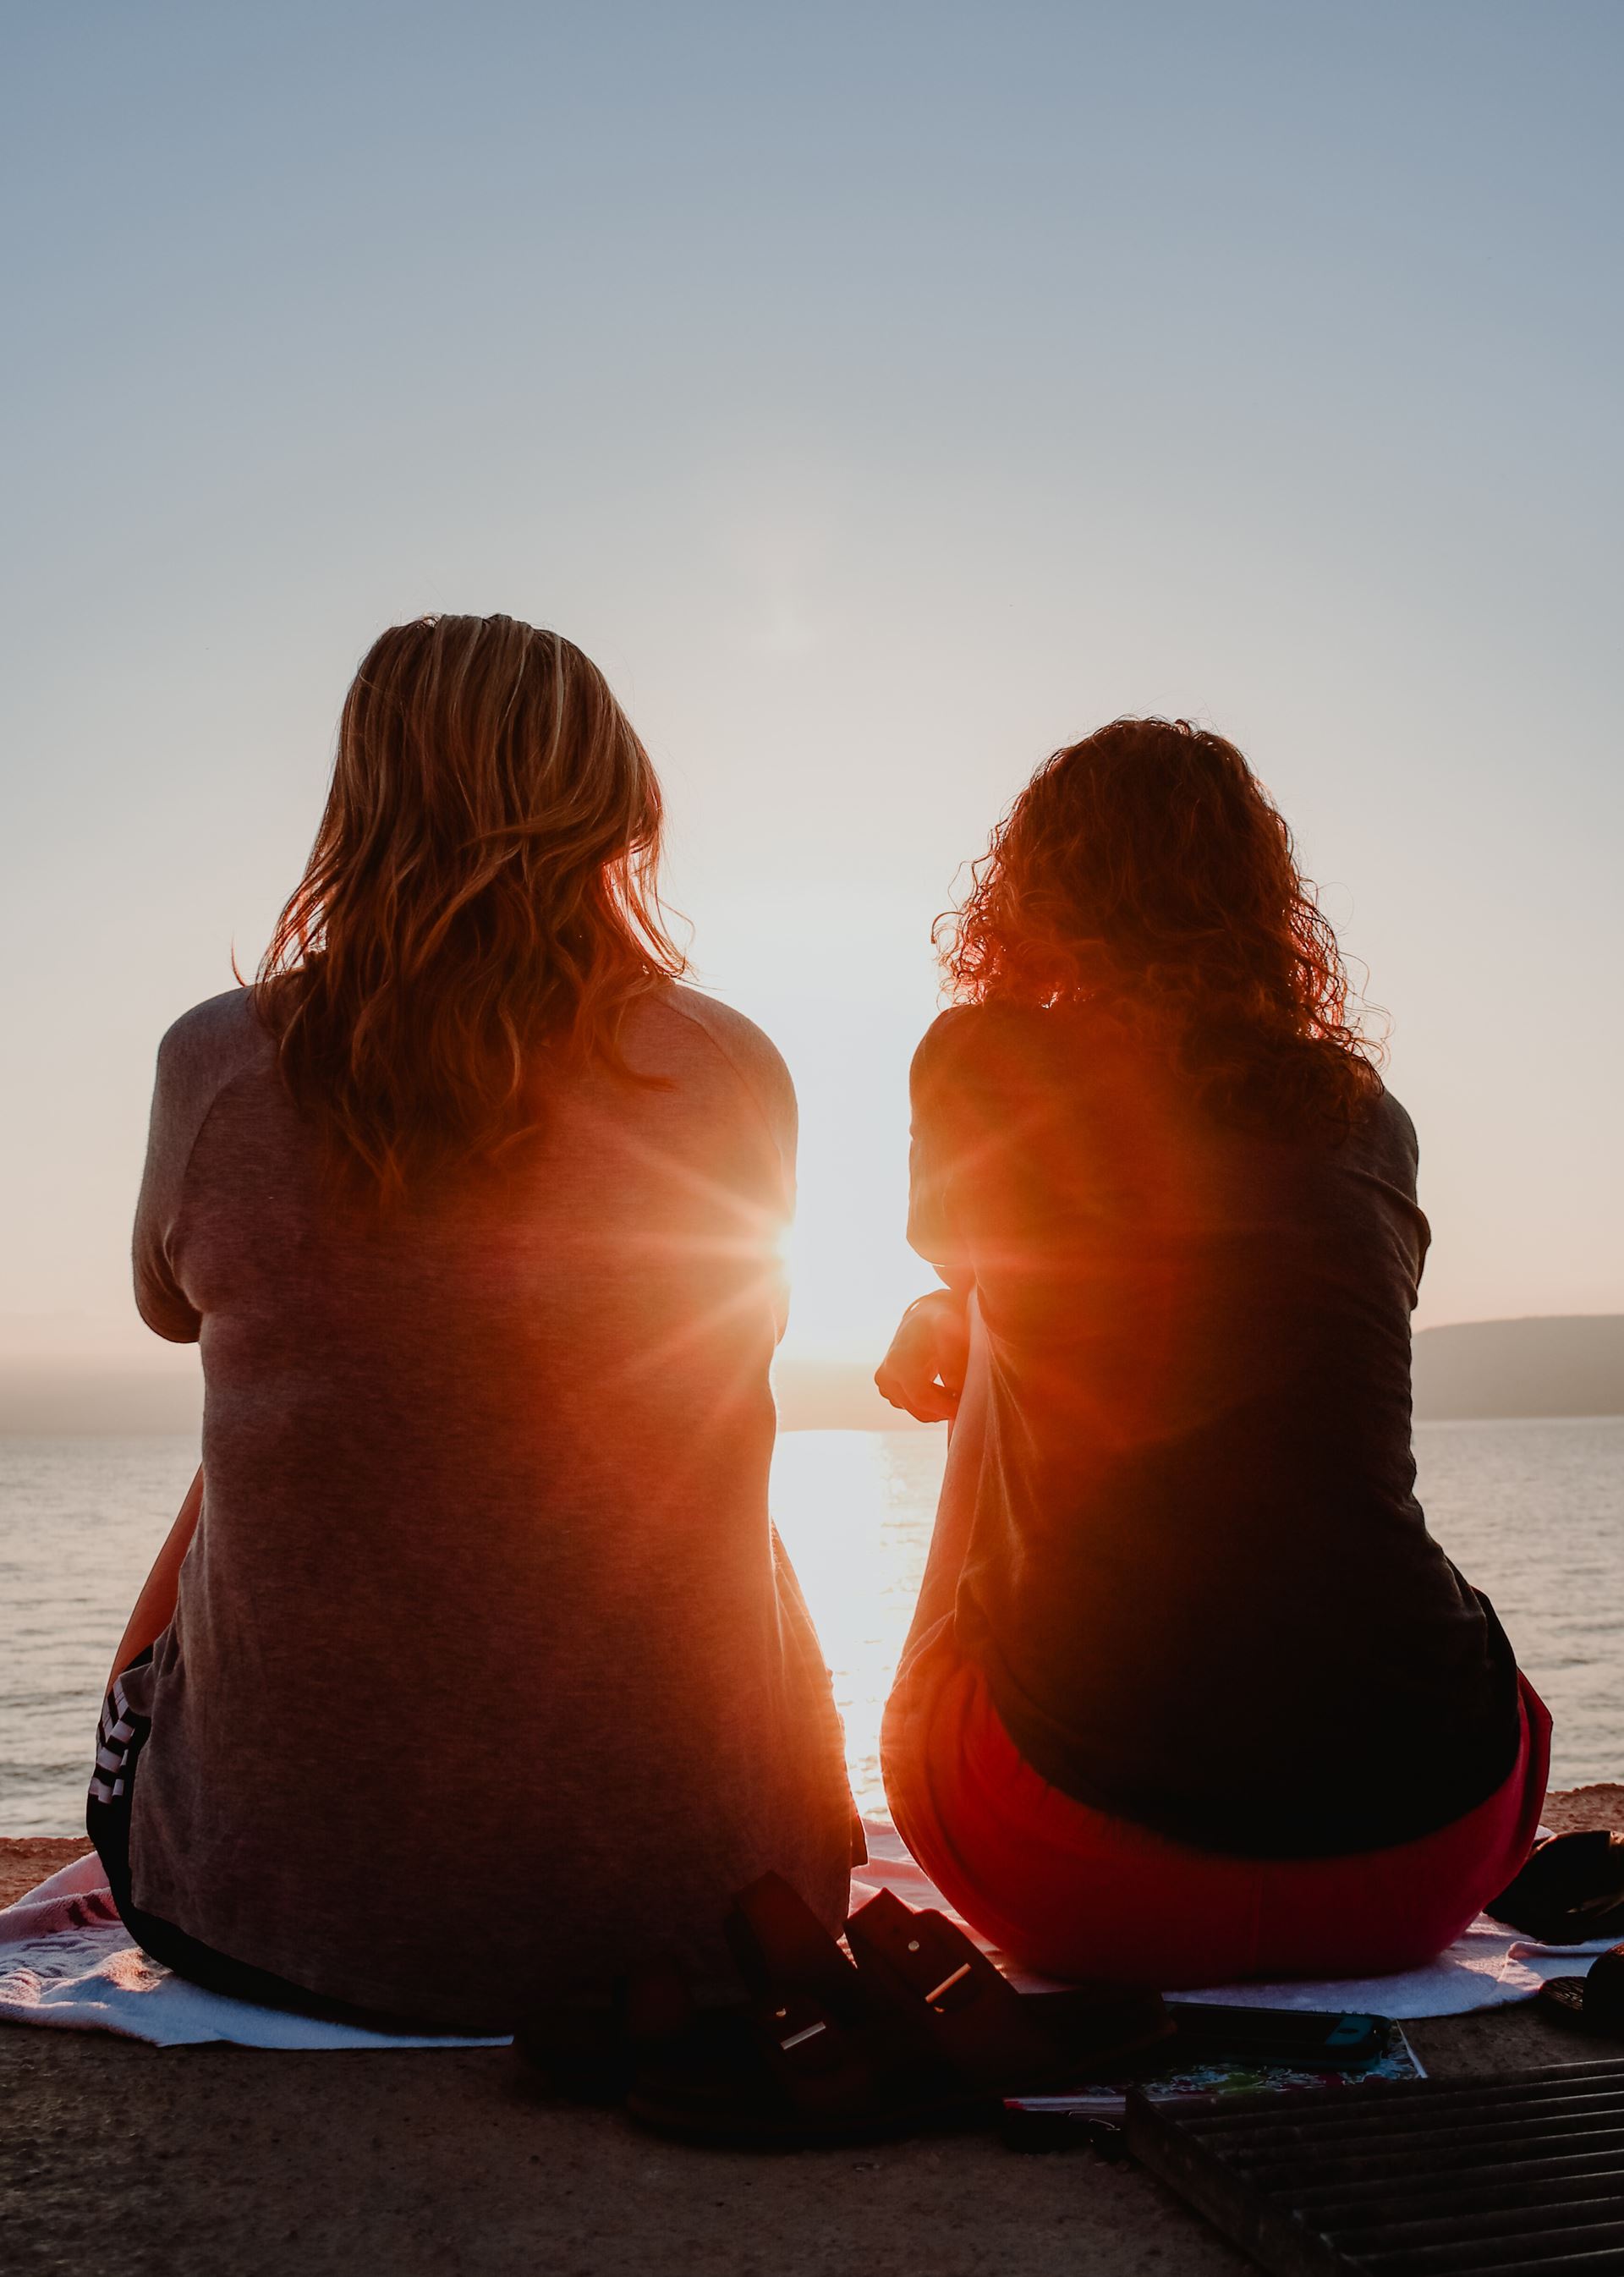 Two women watching a sunset